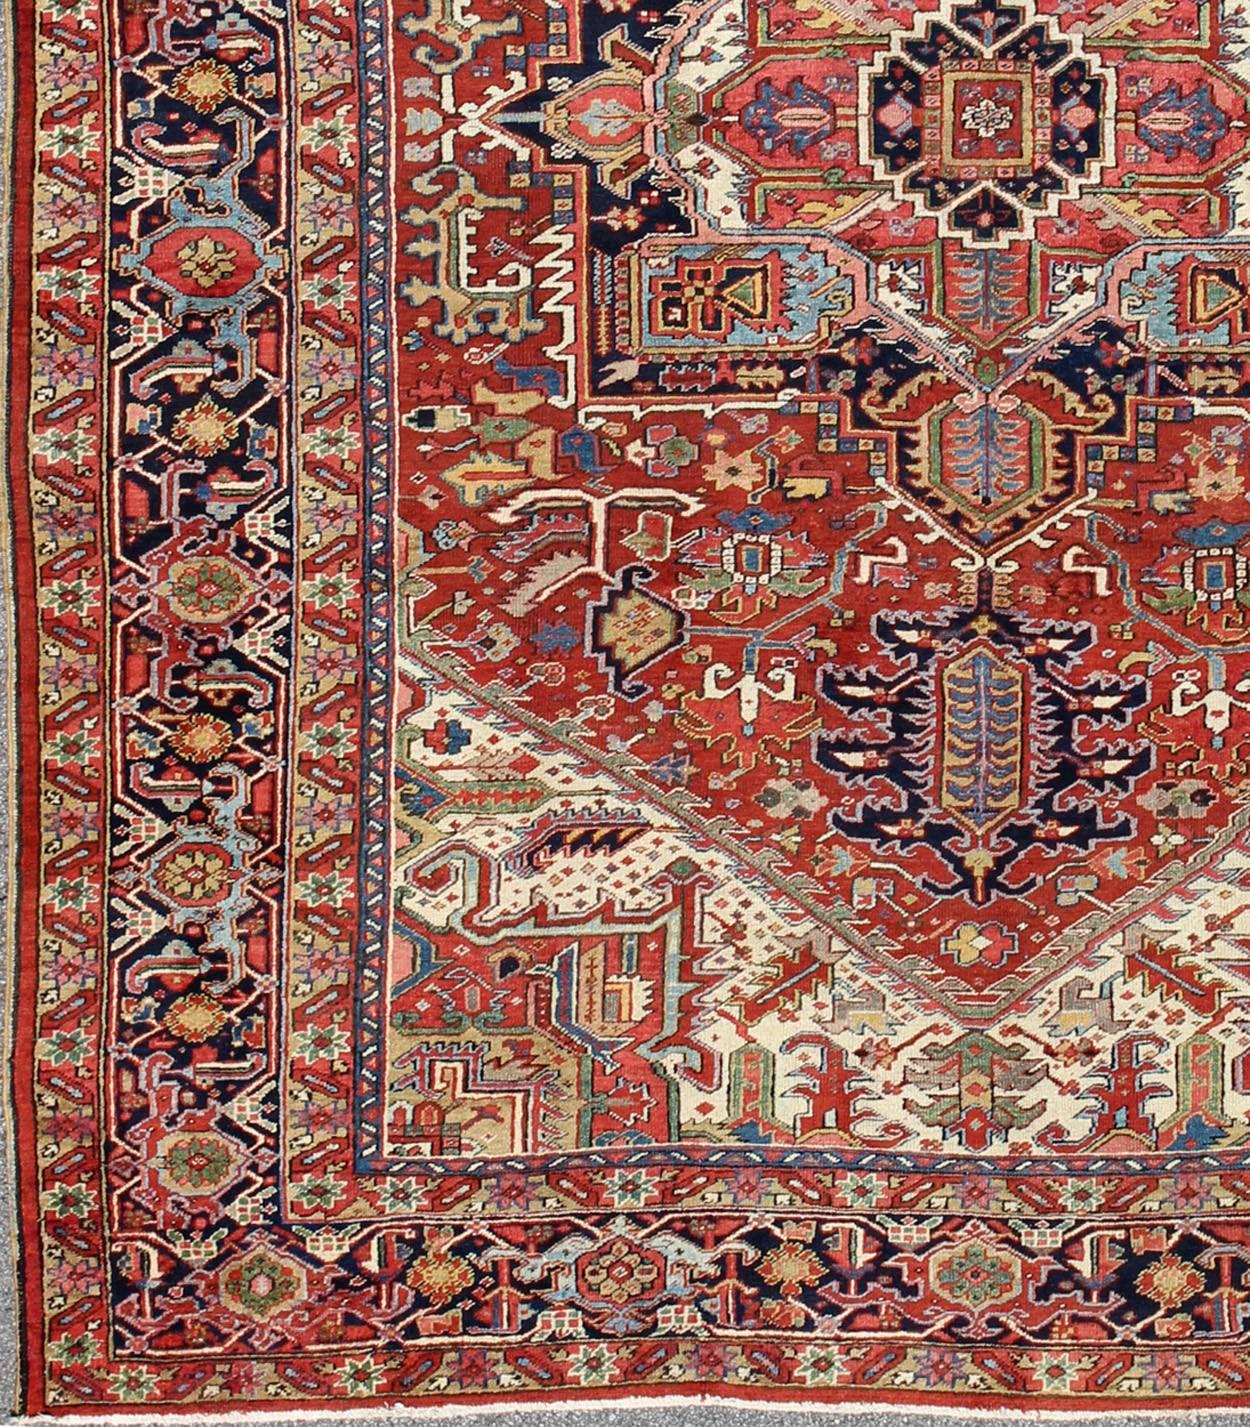 Antique Heriz-Serapi Rug with Geometric Medallion in Rust Red, Dark Blue, Green. Keivan Woven Arts / Rug / A-0203, country of origin / type: Iran /Heriz, circa 1910. 
Measures: 10'3 x 13'3.
This magnificent antique Persian Heriz-Serapi carpet from